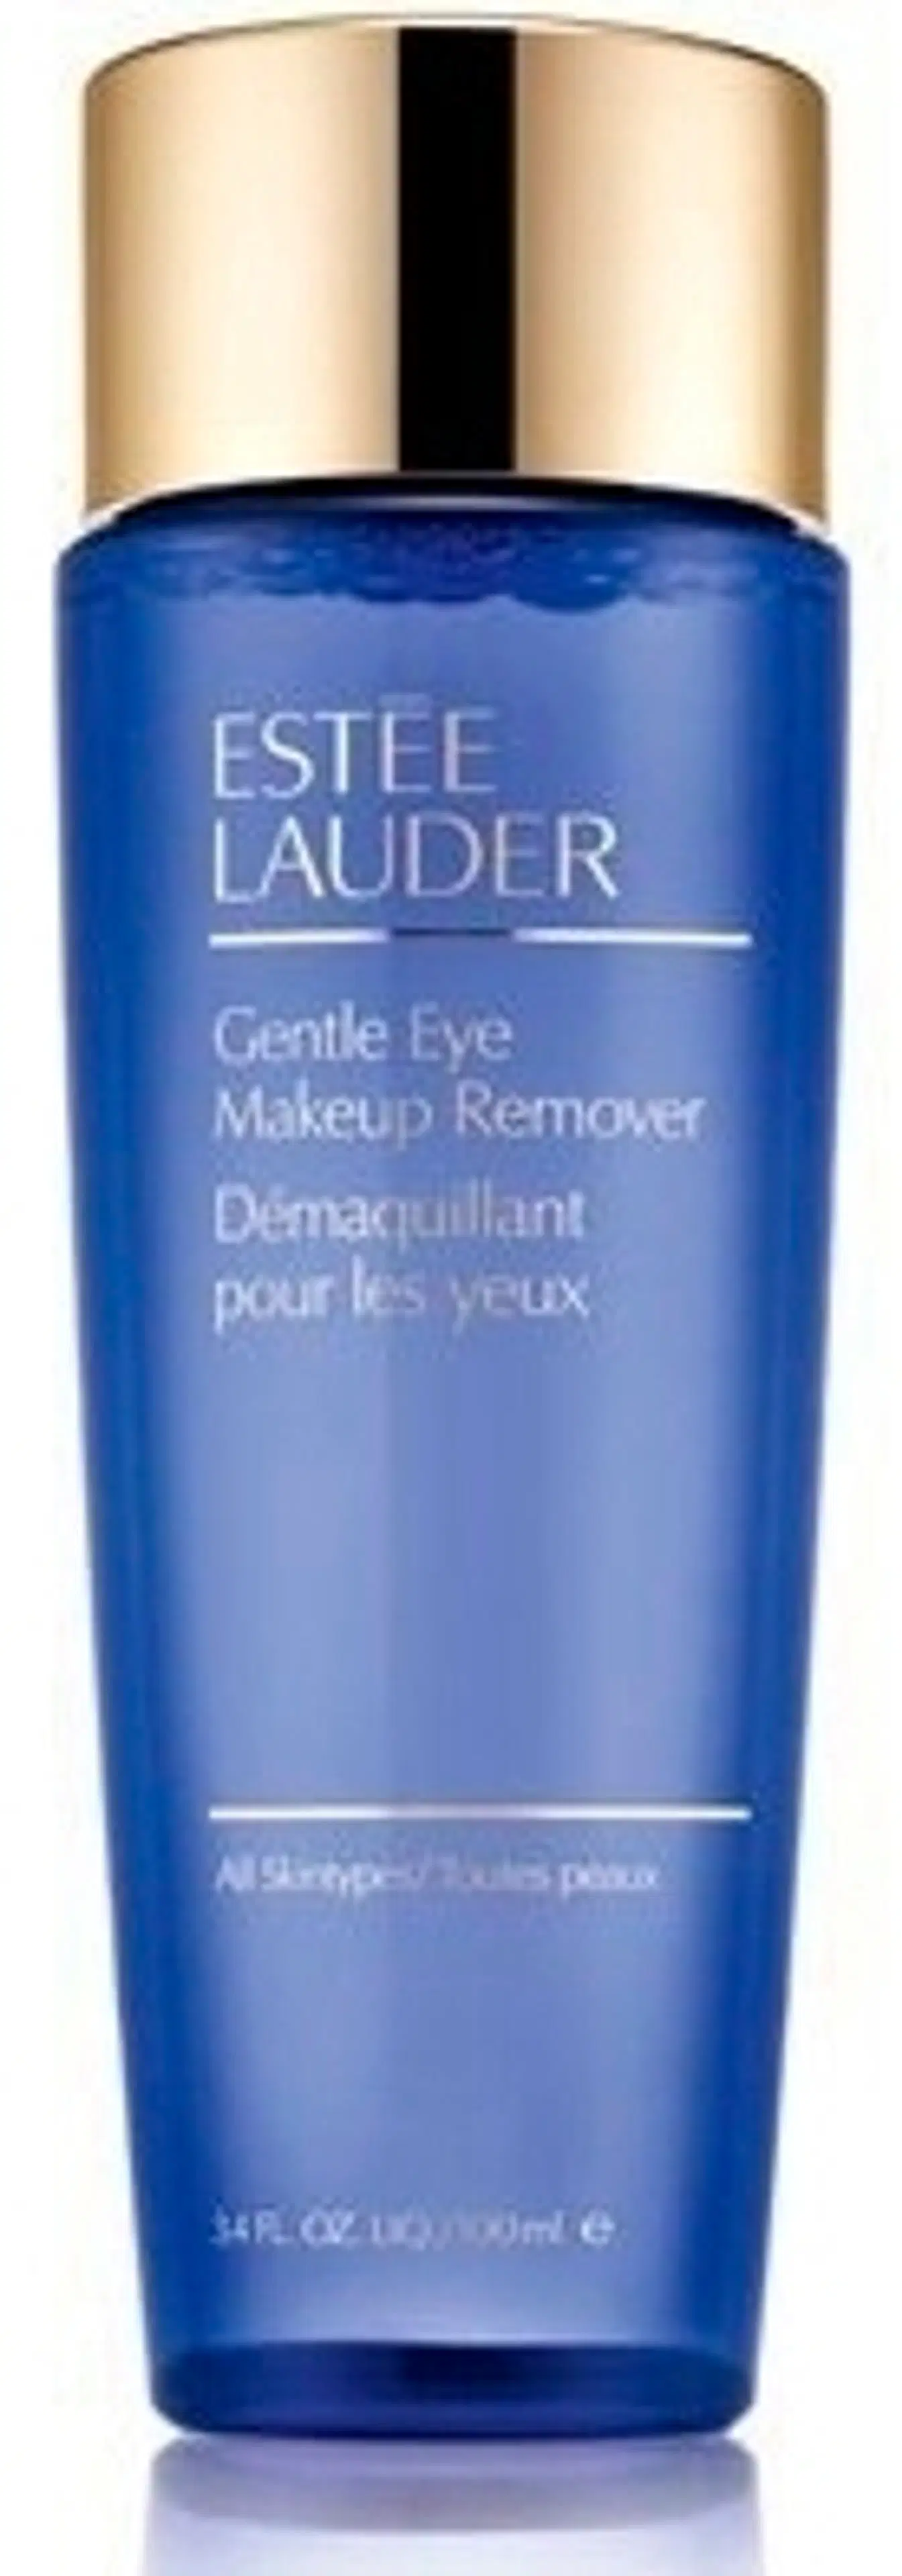 Estée Lauder Gentle Eye Makeup Remover silmämeikinpoistoaine 100 ml